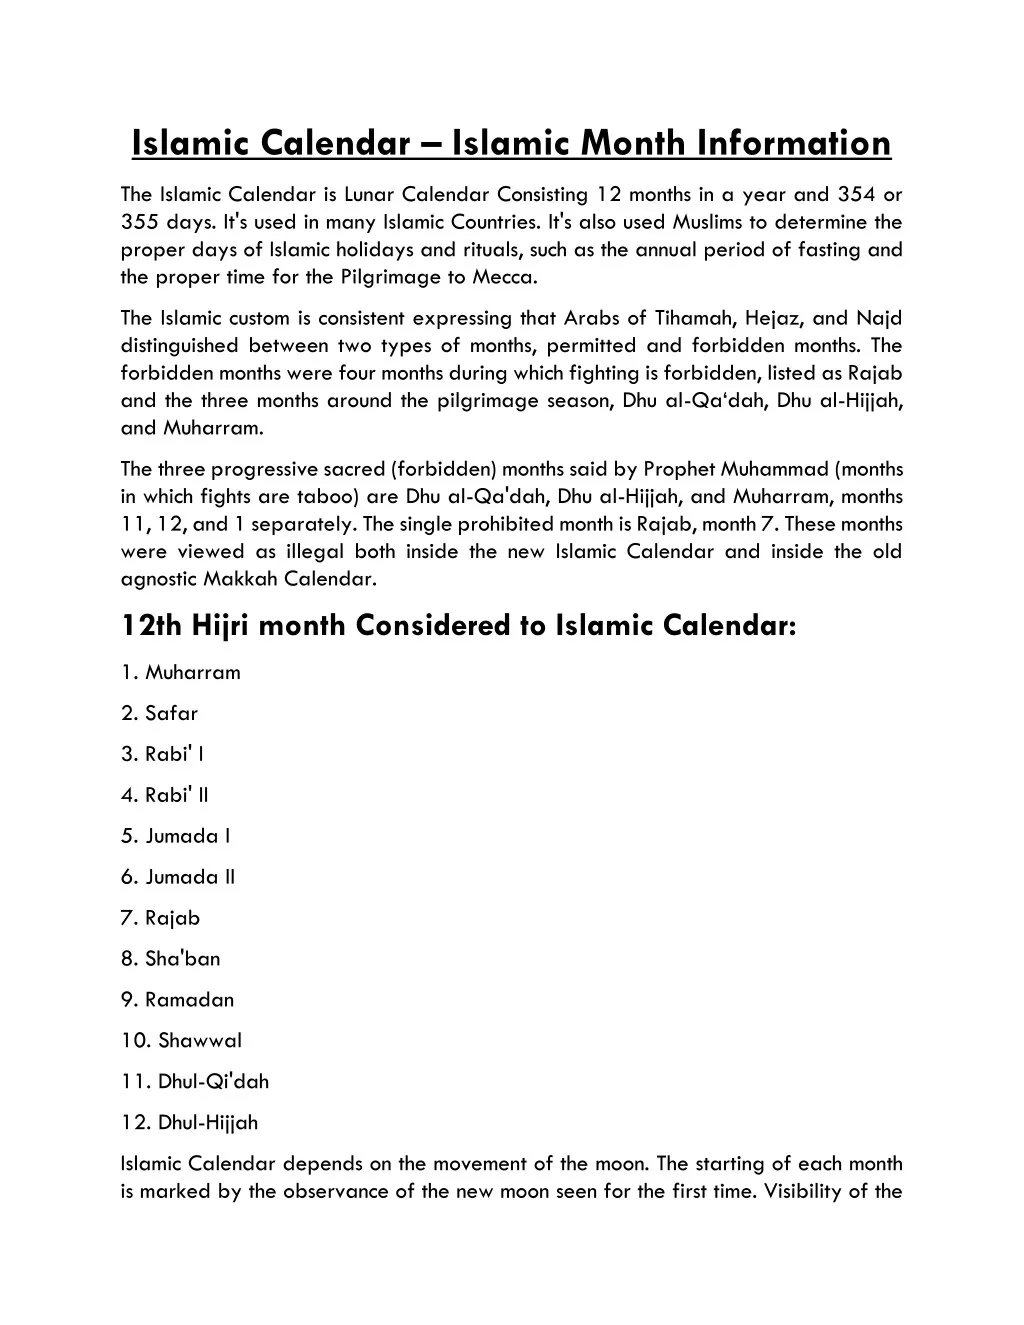 PPT Islamic Calendar Islamic Month Information PowerPoint